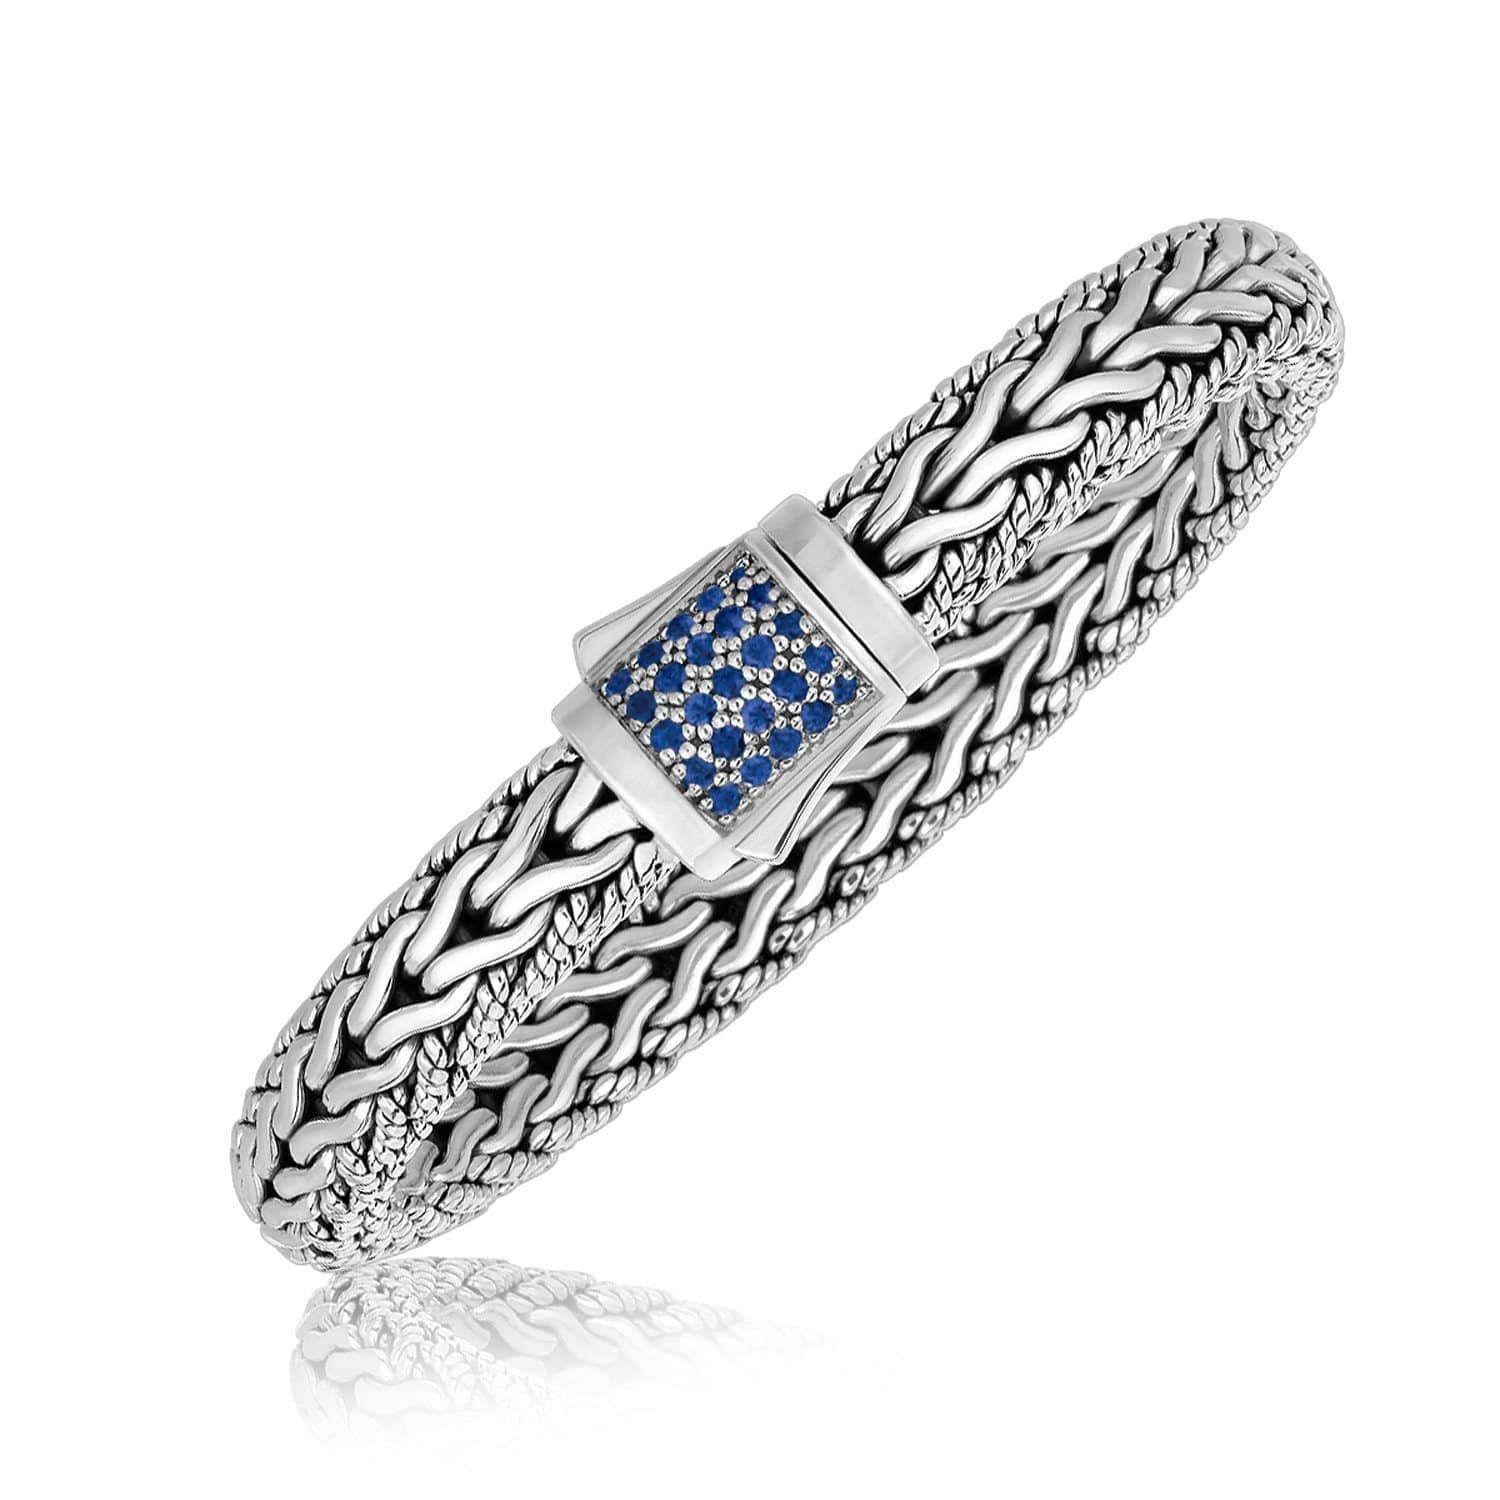 Blue Star Sapphire Rhodium Over Sterling Silver Bracelet 16.69ctw. - CEH095  | JTV.com